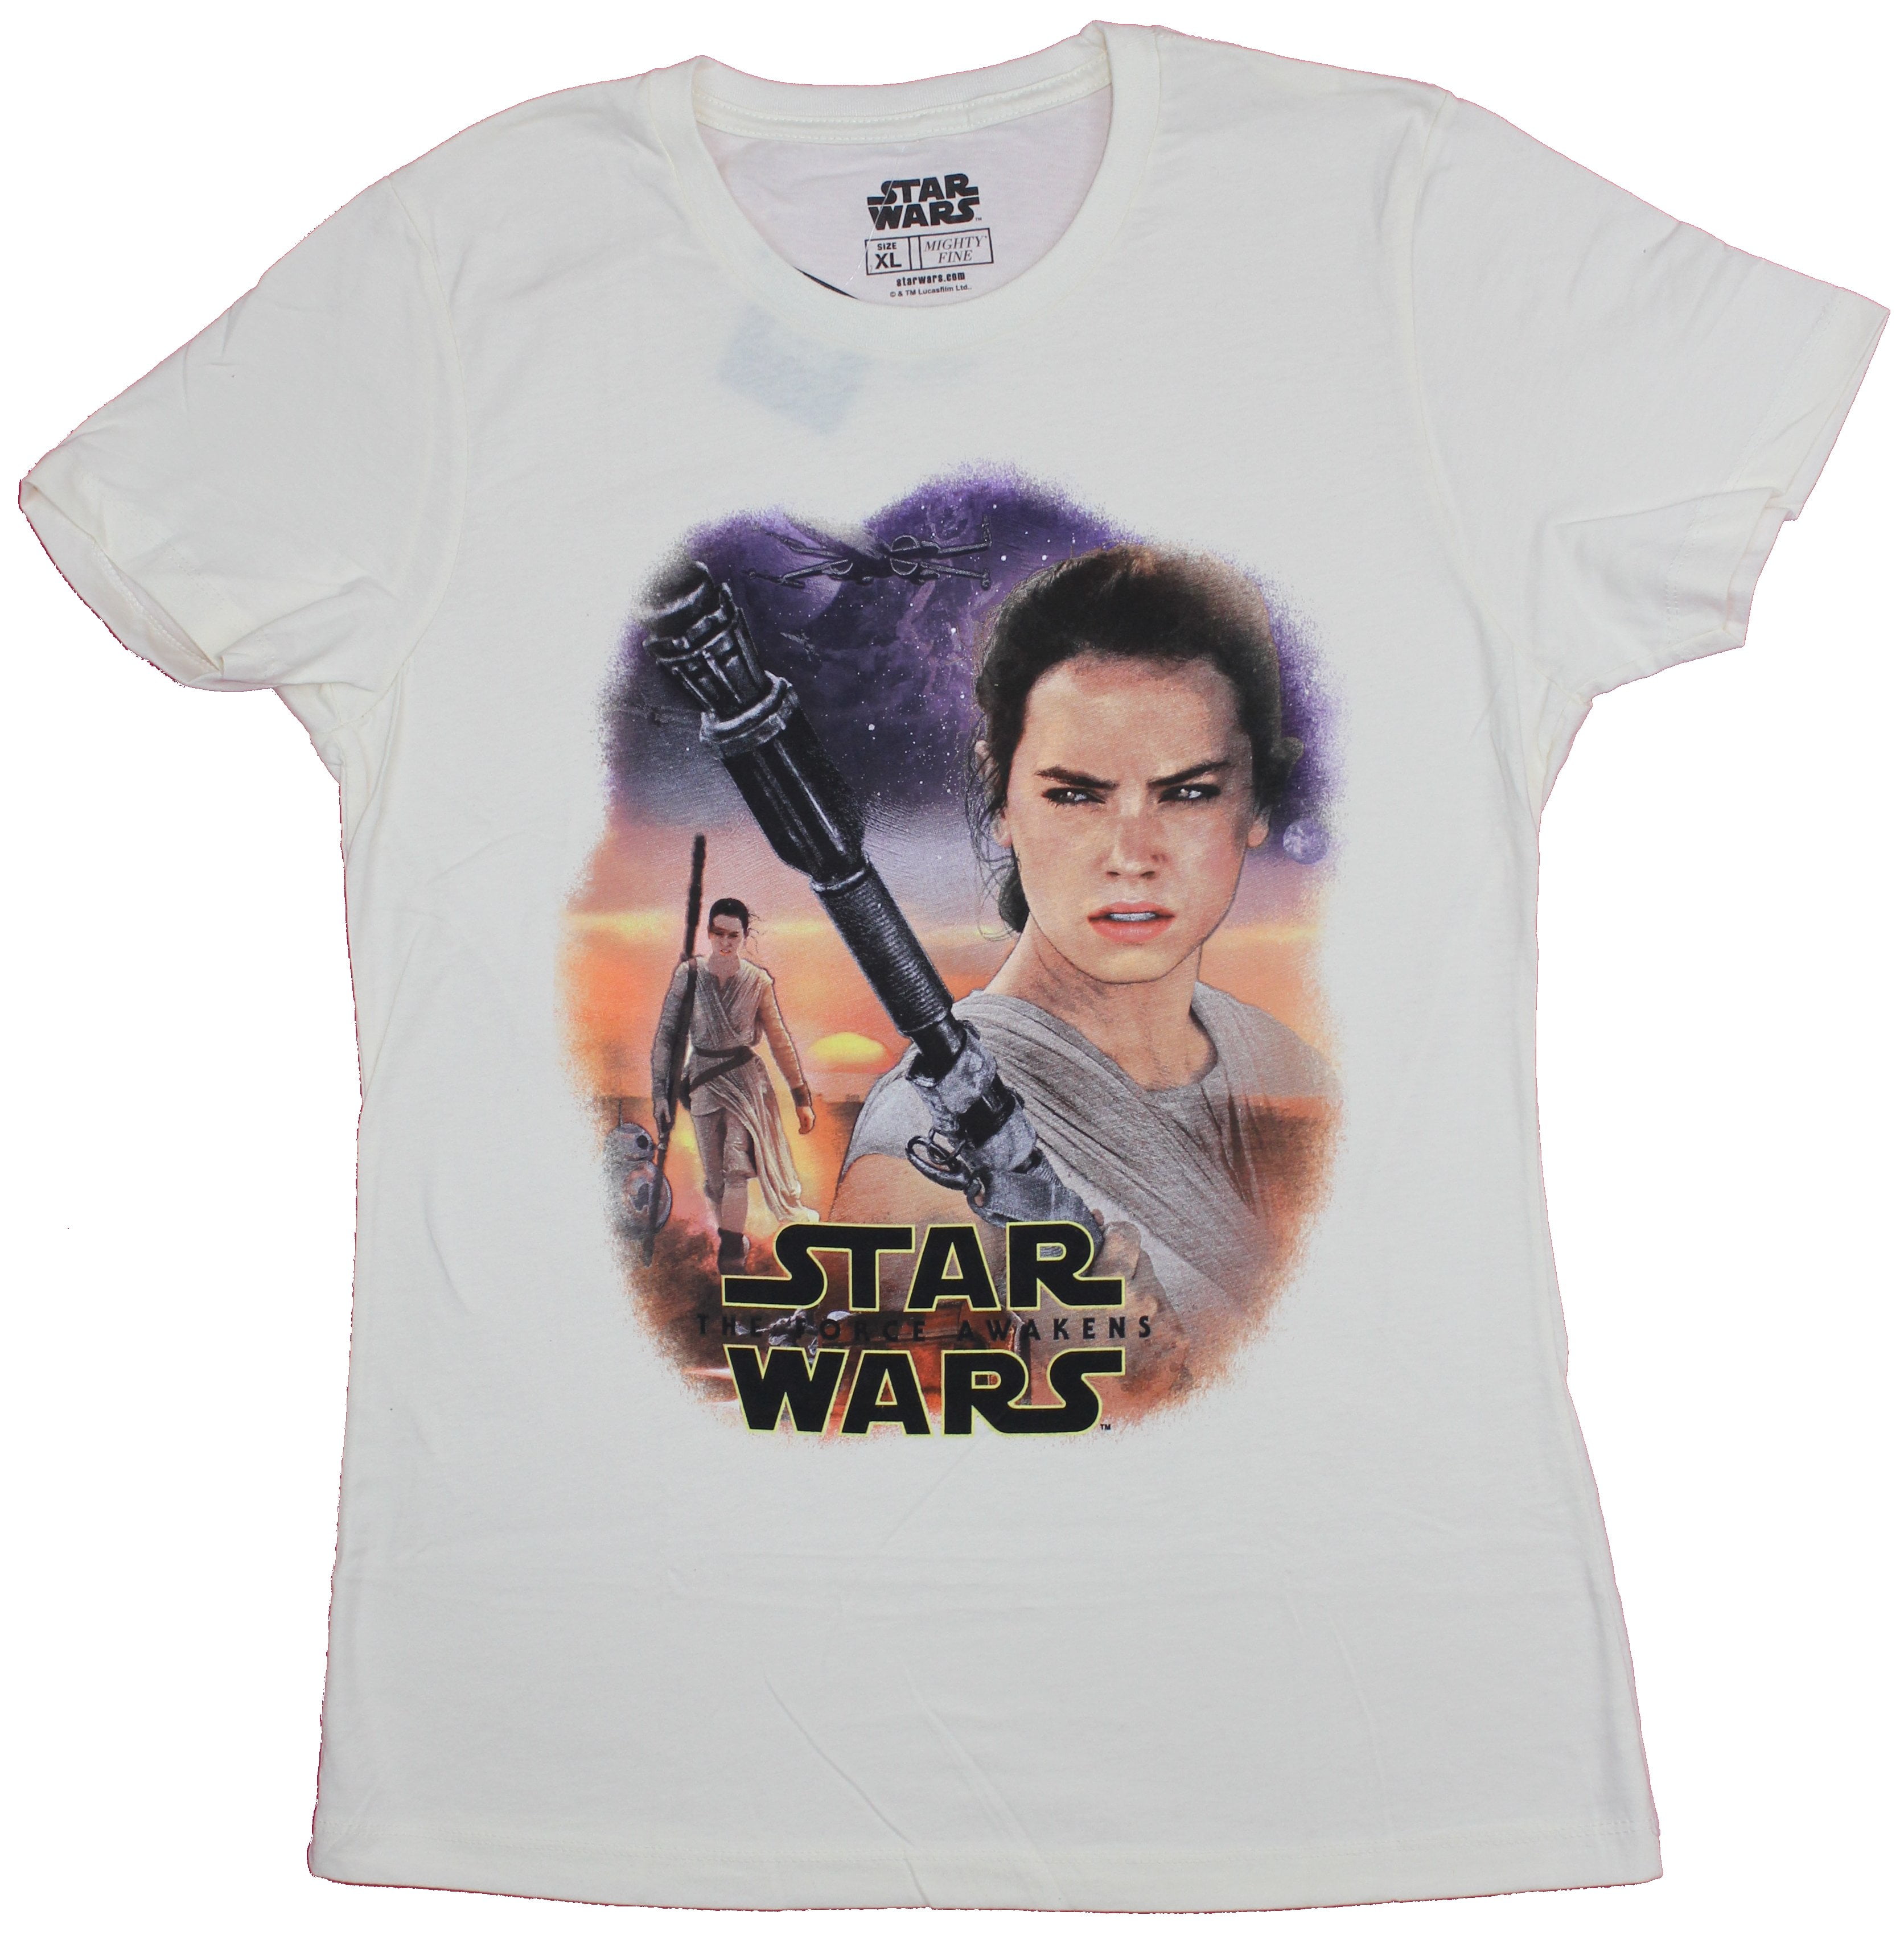 New Star Wars "Force Awakens Rey" Youth Girls Purple Licensed Hi Low Shirt 